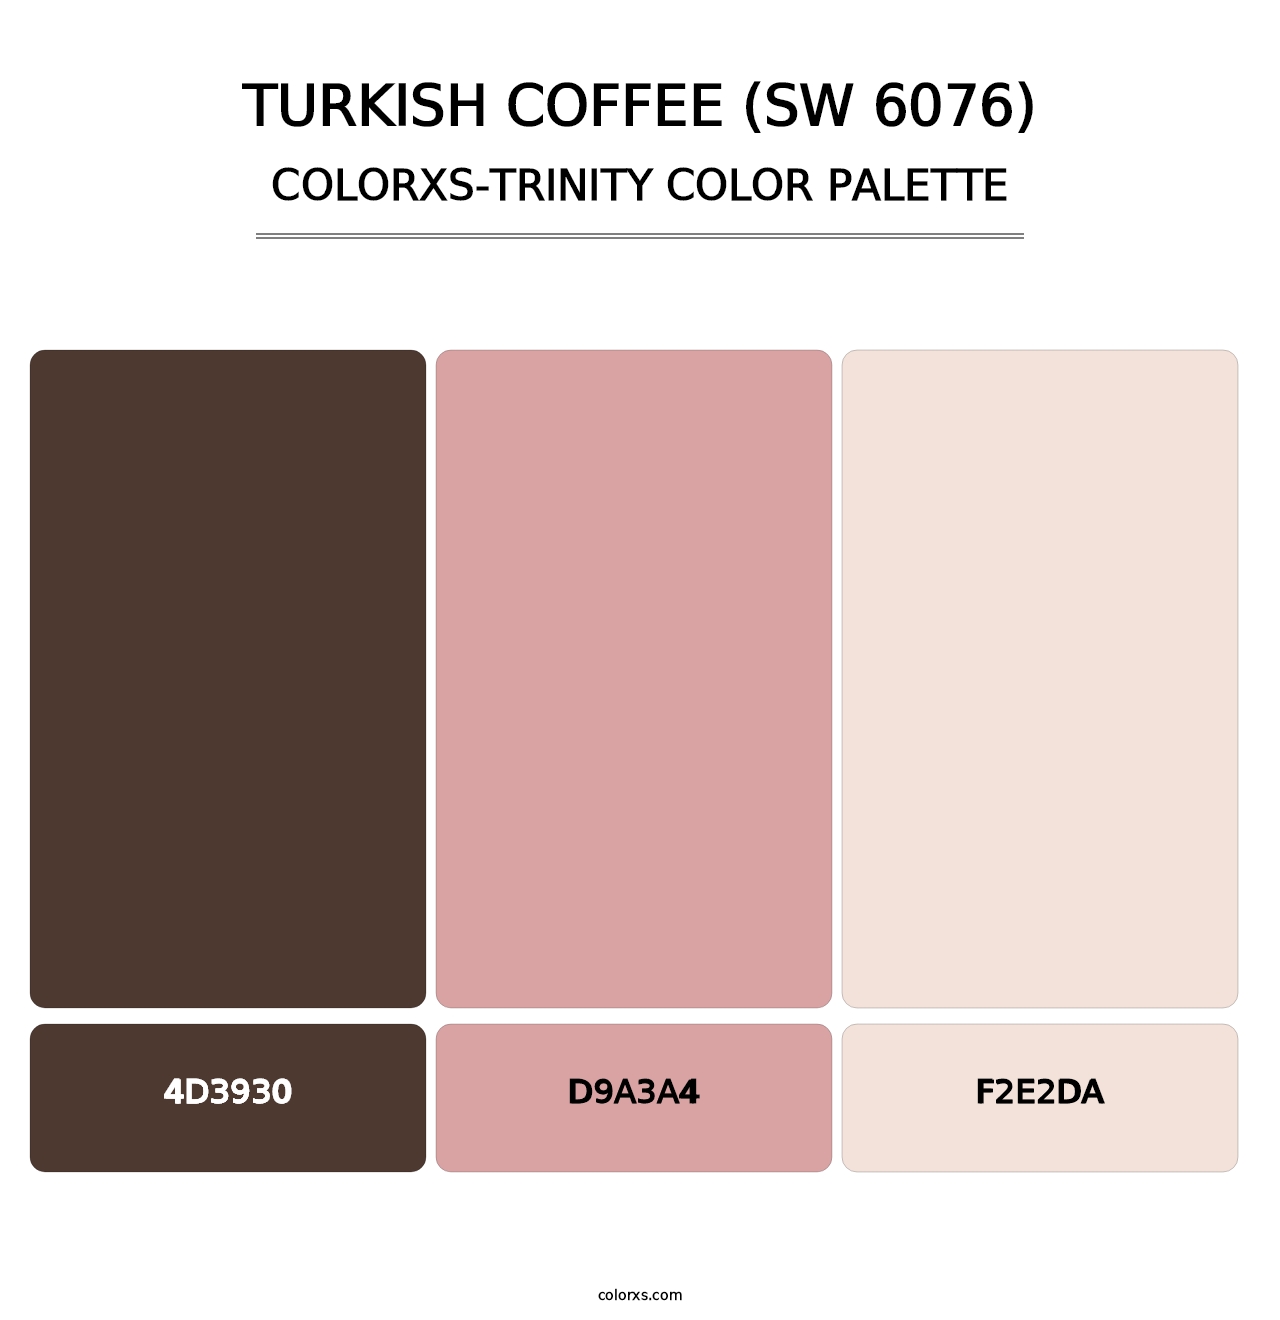 Turkish Coffee (SW 6076) - Colorxs Trinity Palette